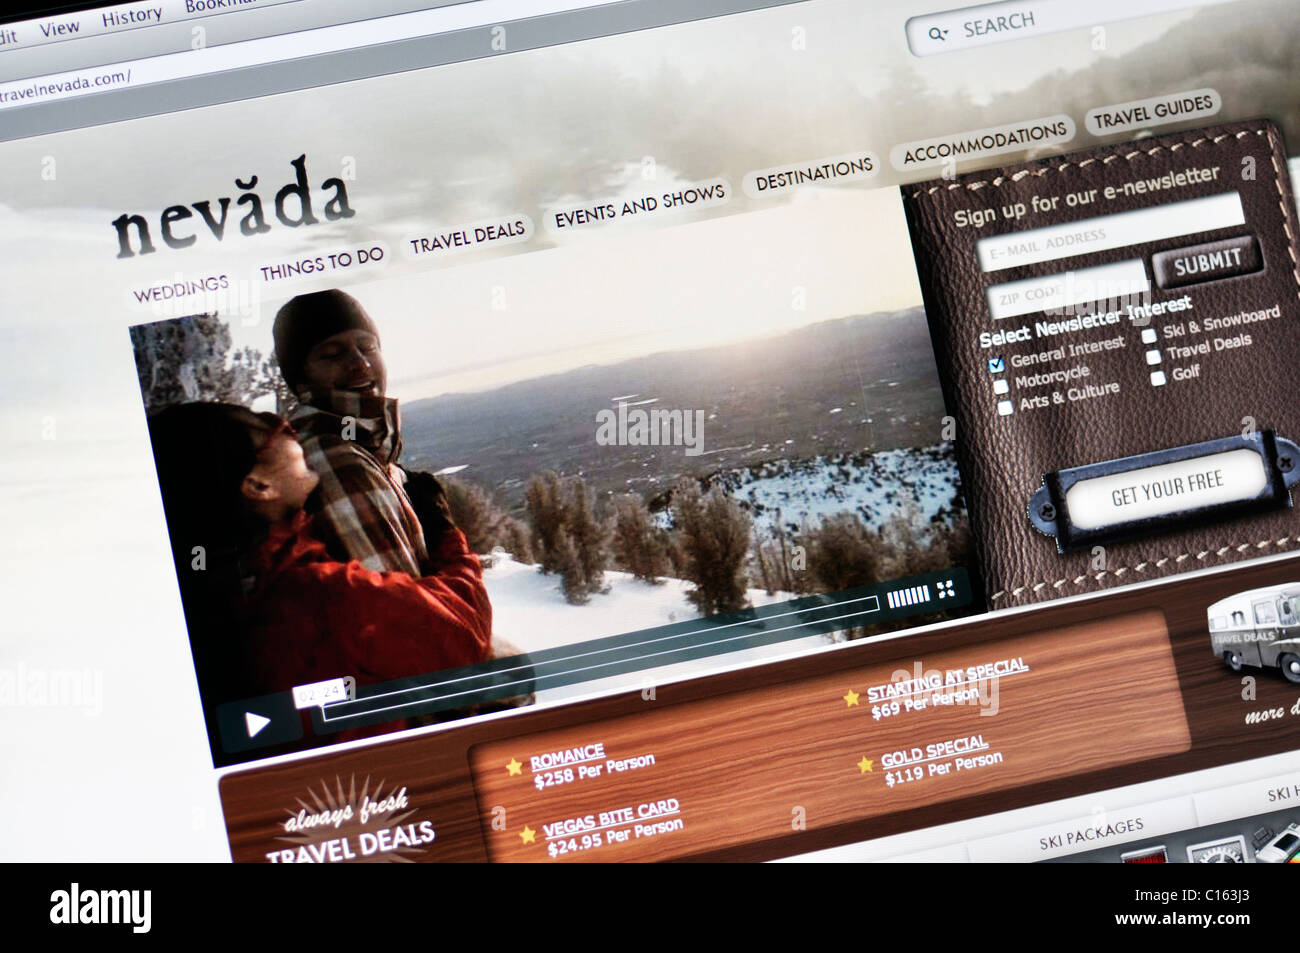 Nevada offizielle Tourismus-website Stockfoto